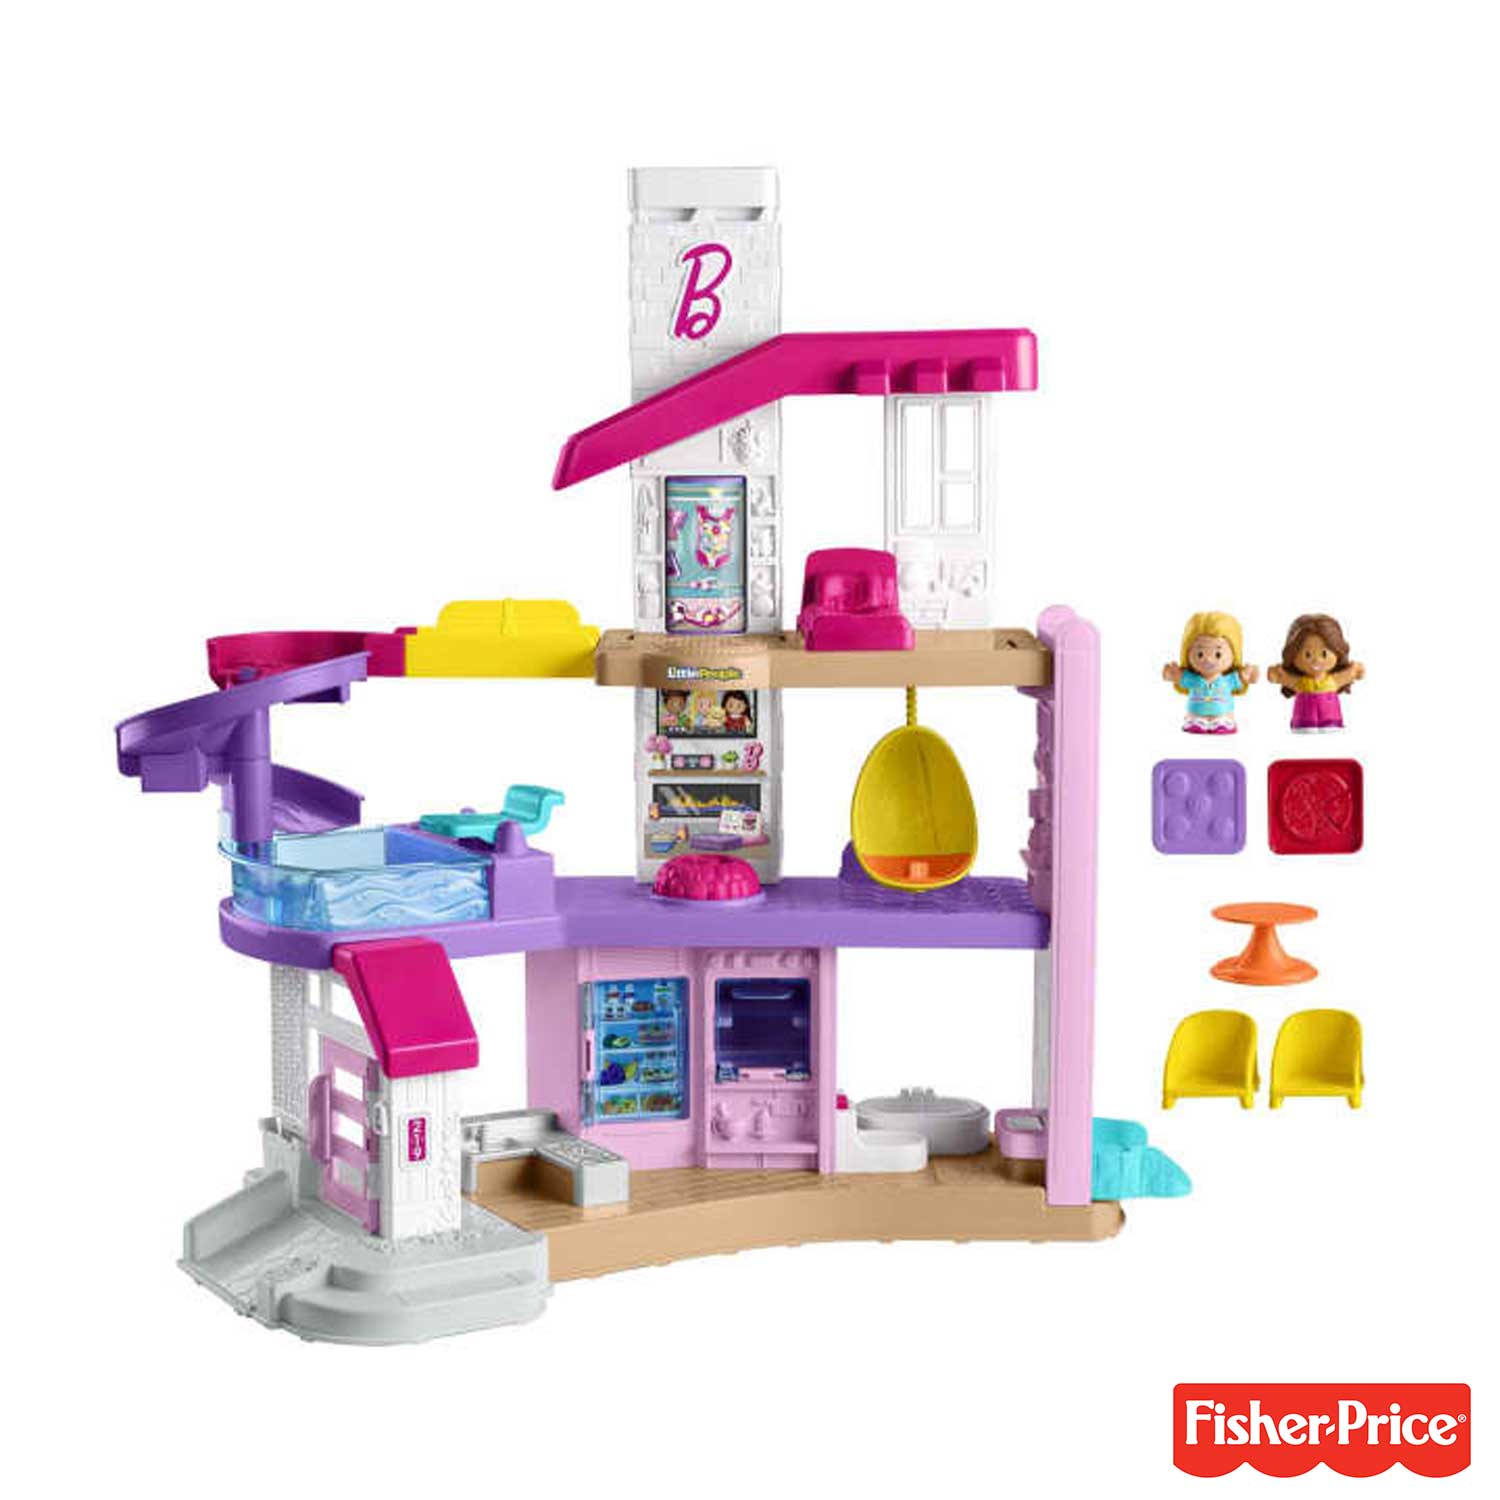 Fisher Price - Barbie® Little DreamHouse by Little People HJN54